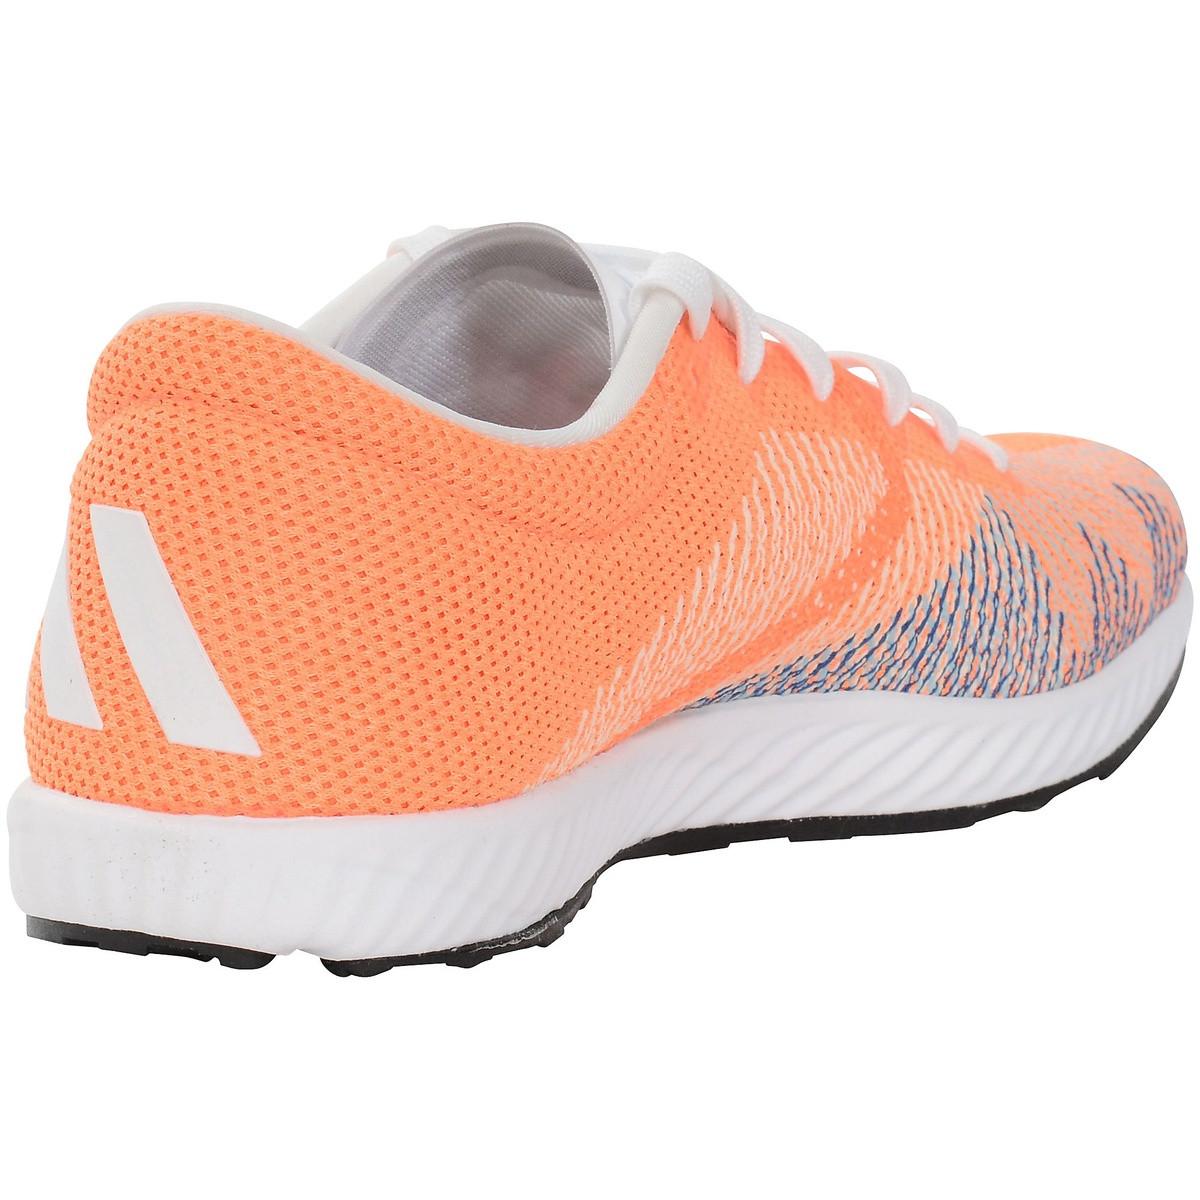 Giày Chạy Bộ Nữ Adidas Adizero Bekoji W Running Shoes EF1448 Size 36.5 3